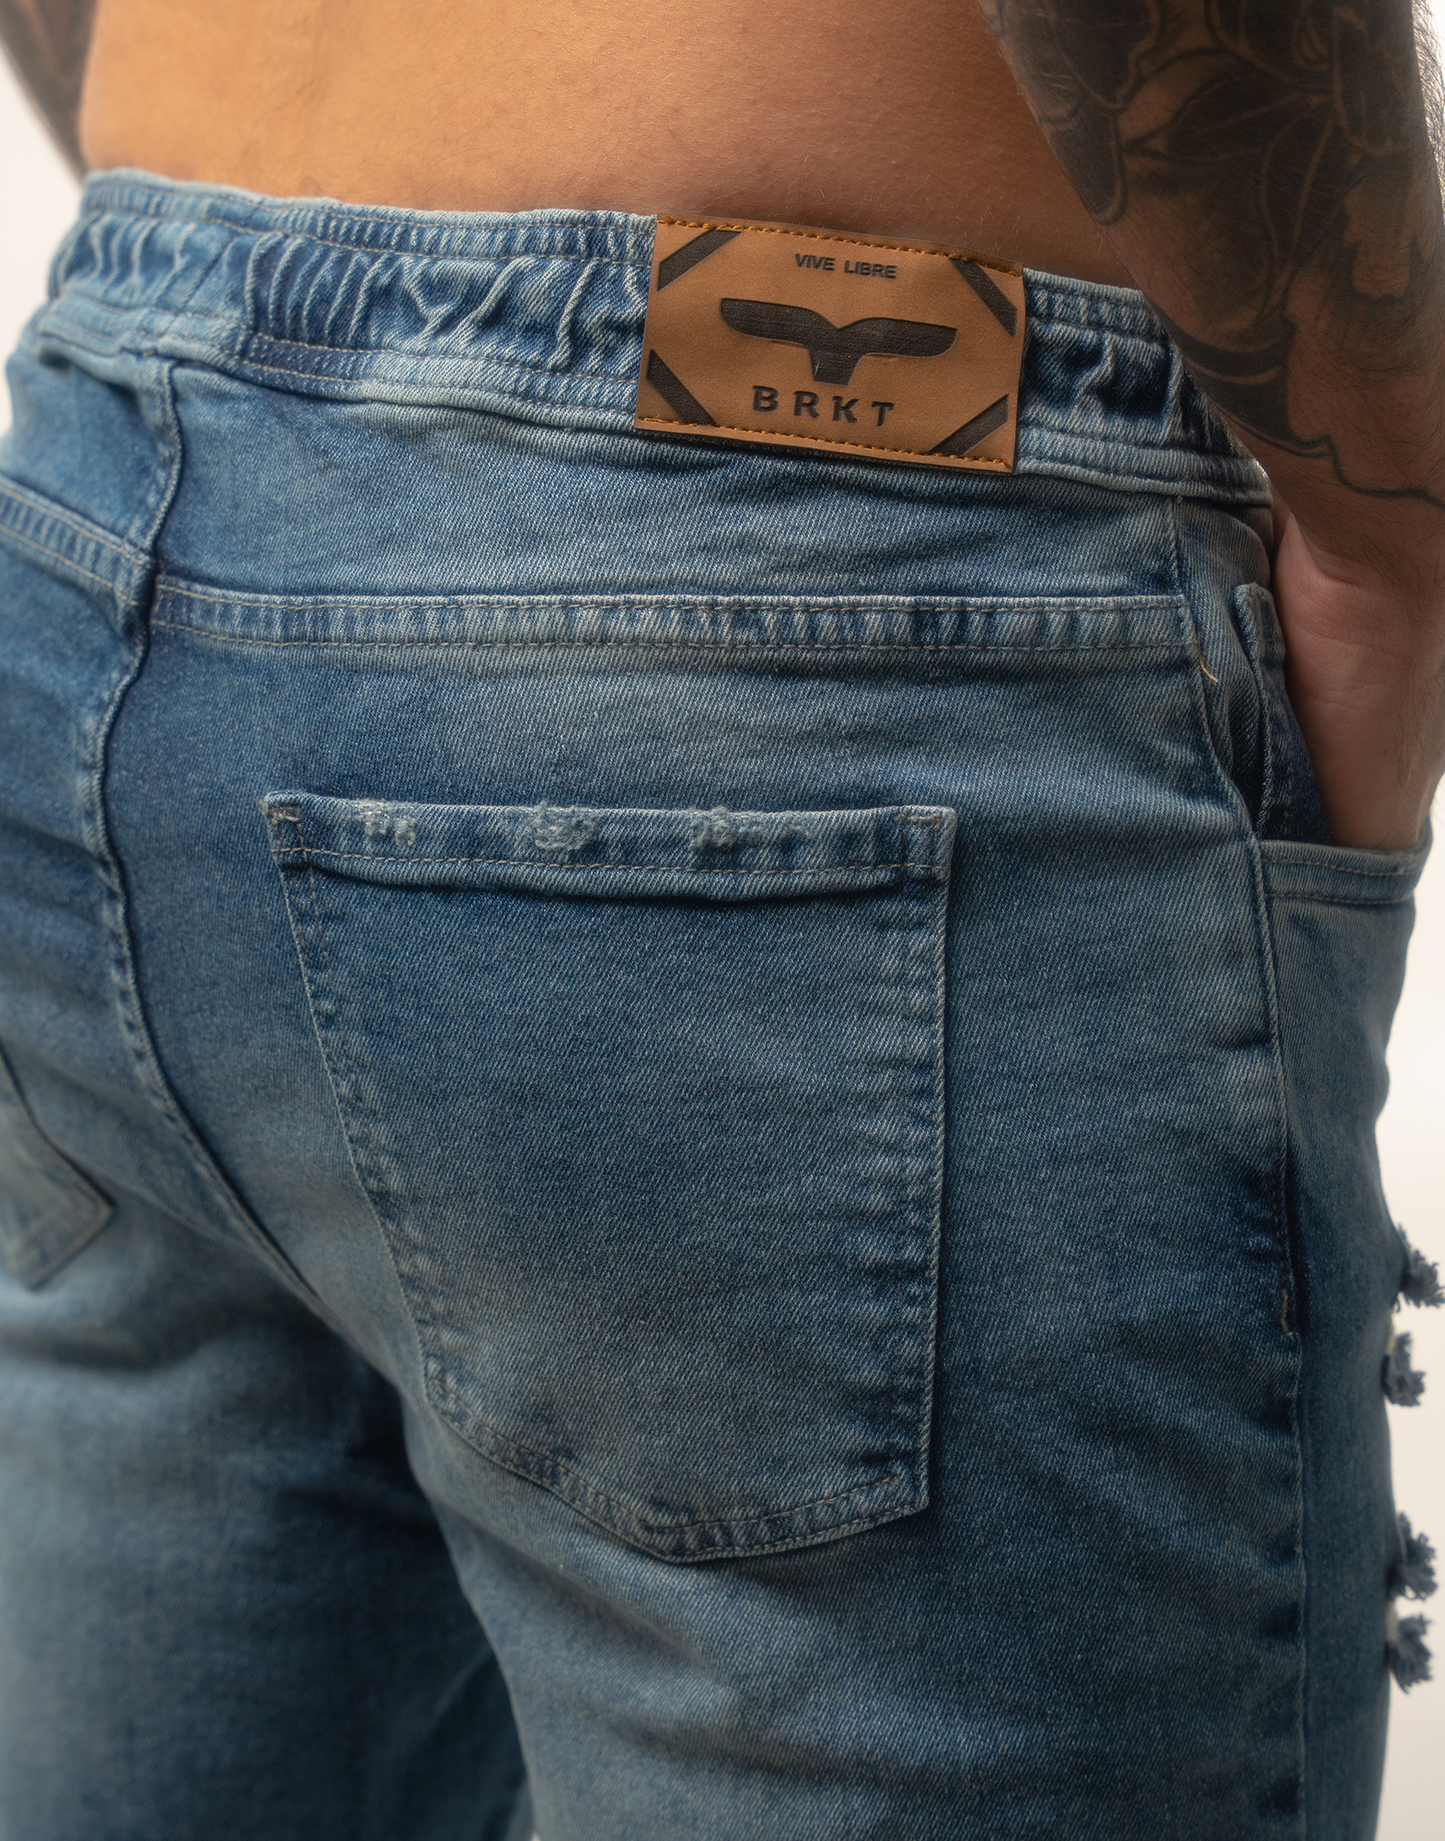 Jeans jogger hombre - N/C